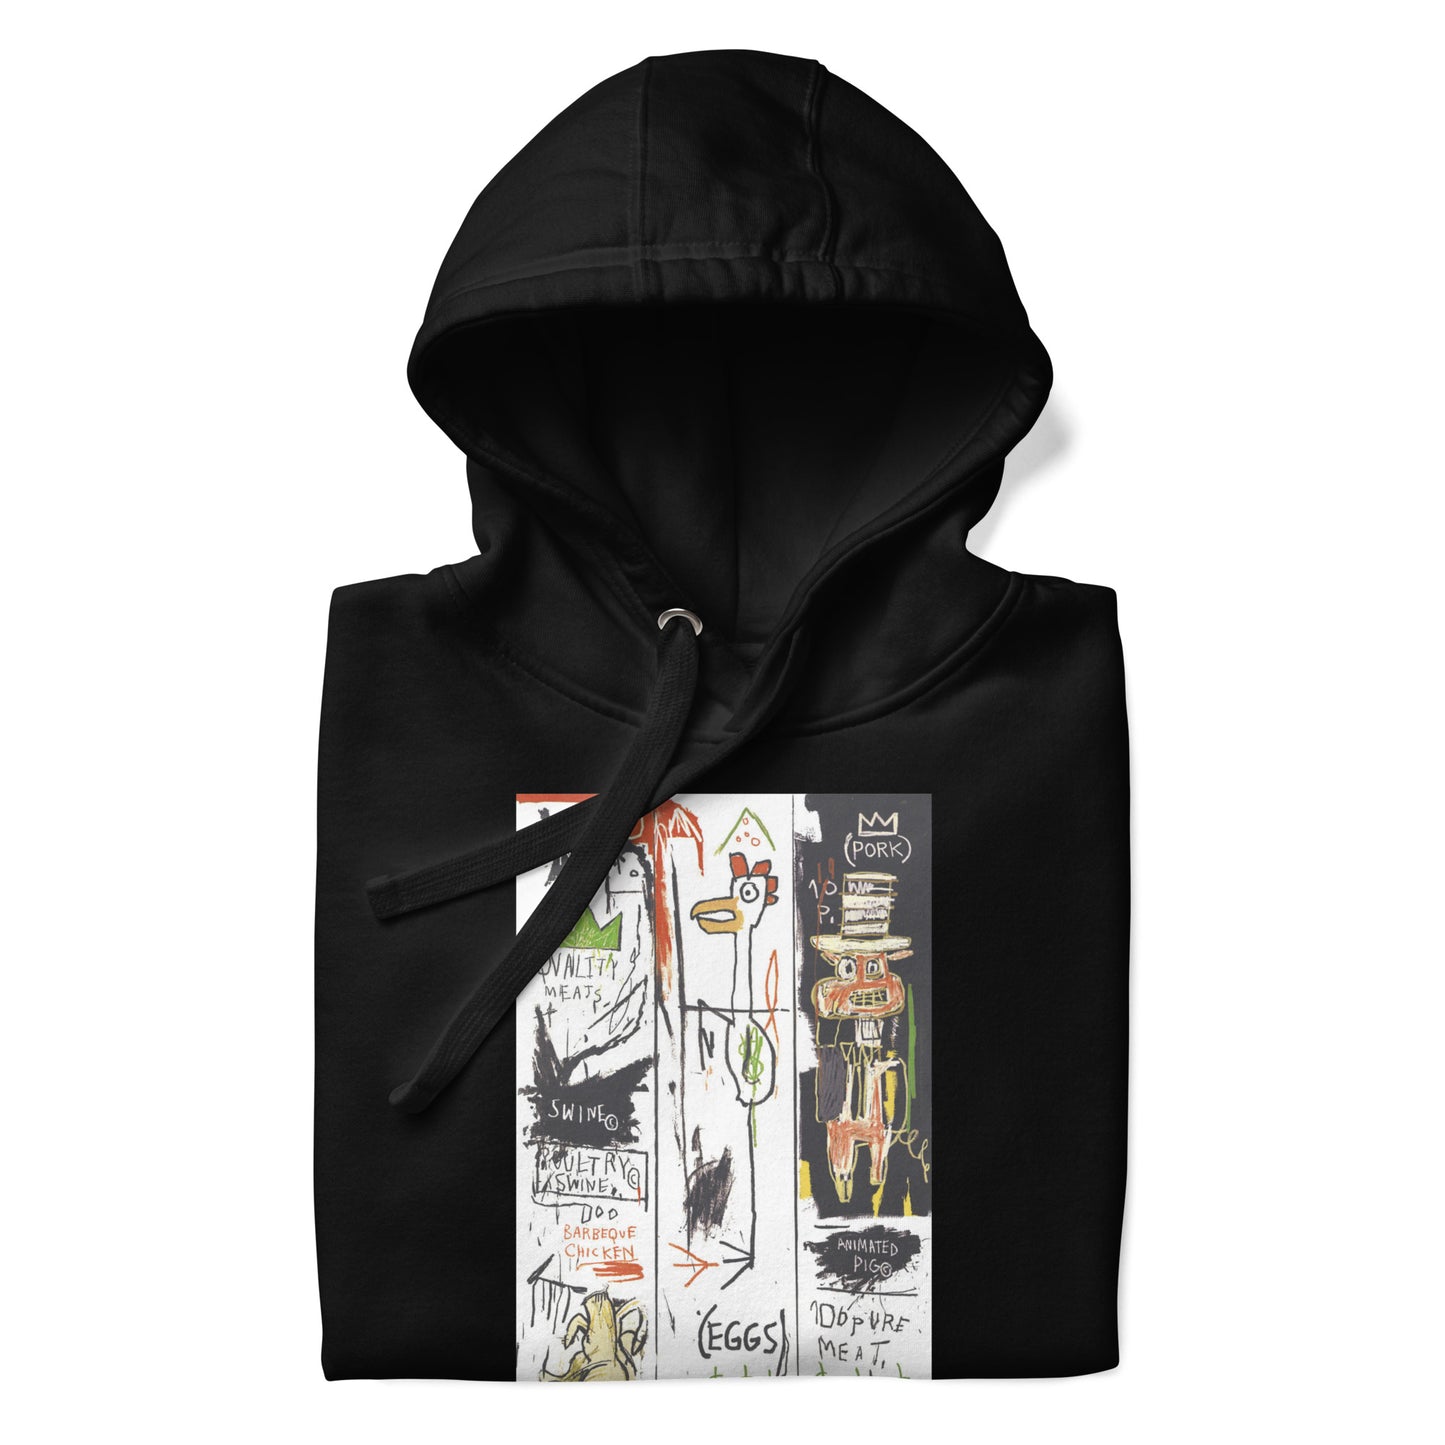 Jean-Michel Basquiat "Quality Meats for the Public" 1982 Artwork Printed Premium Streetwear Sweatshirt Hoodie Black